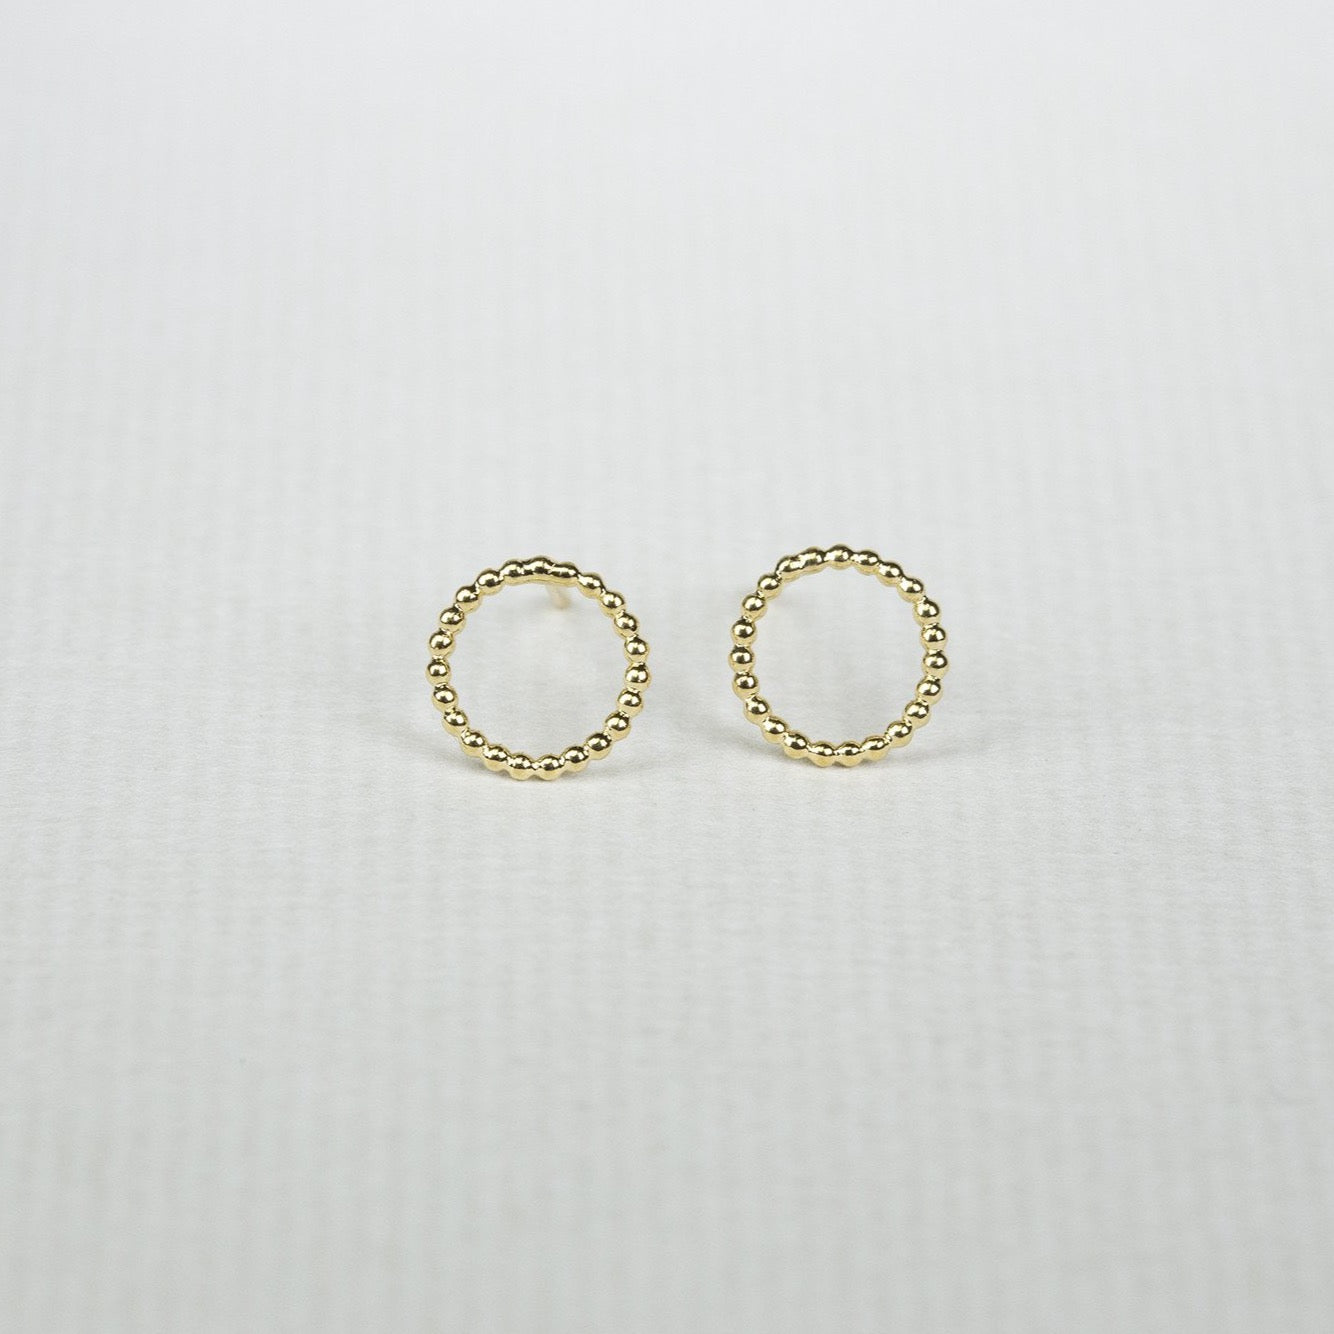 Yoriko Mitsuhashi gold plated beaded circle studs 